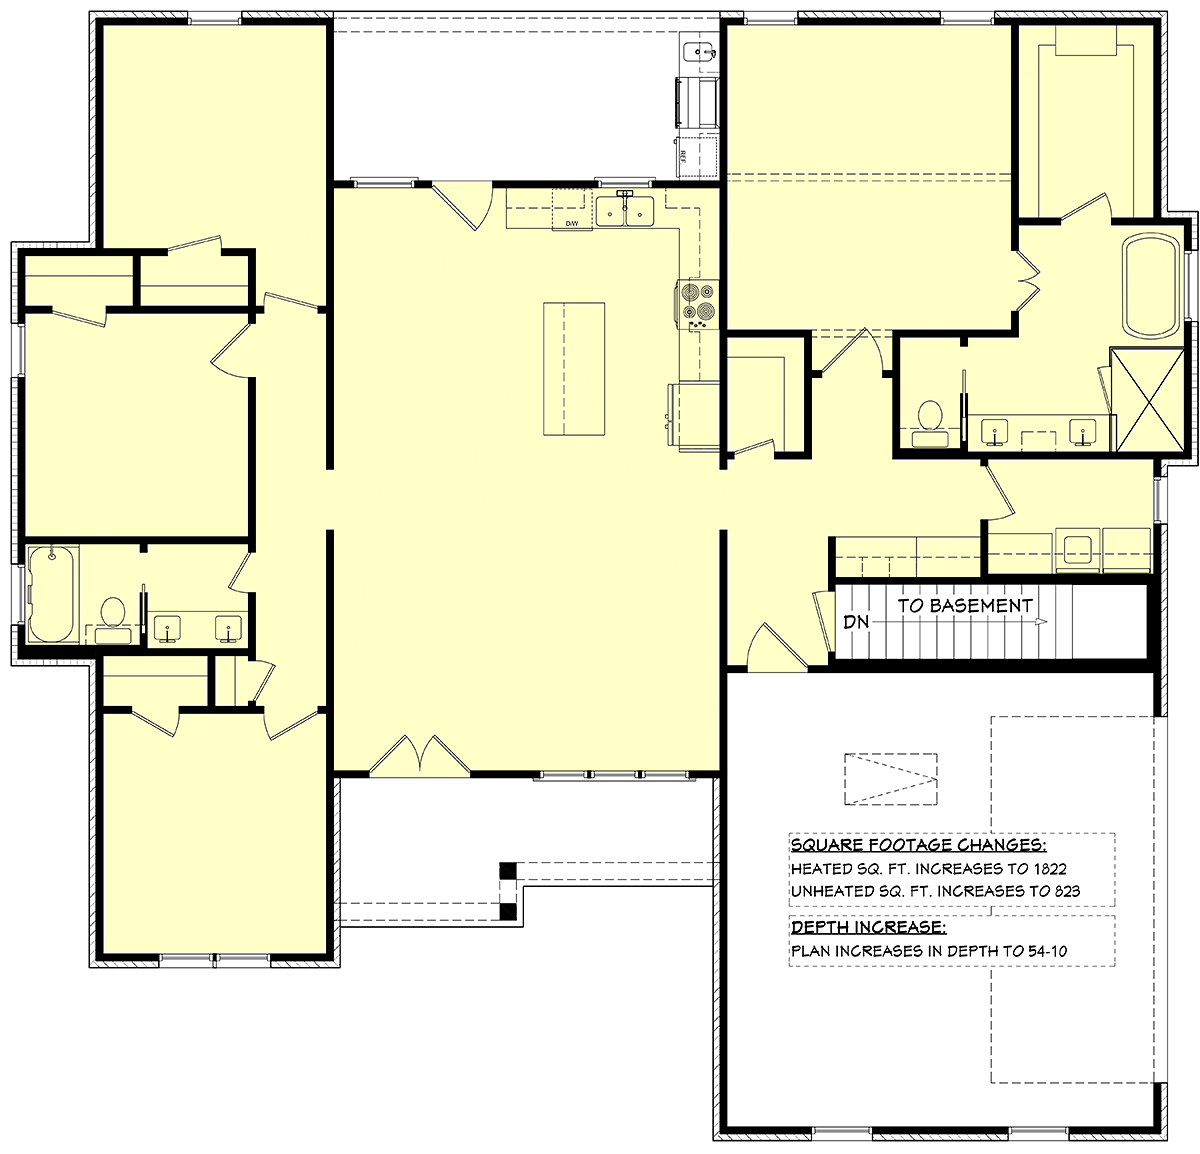 House Plan 82911 Alternate Level One